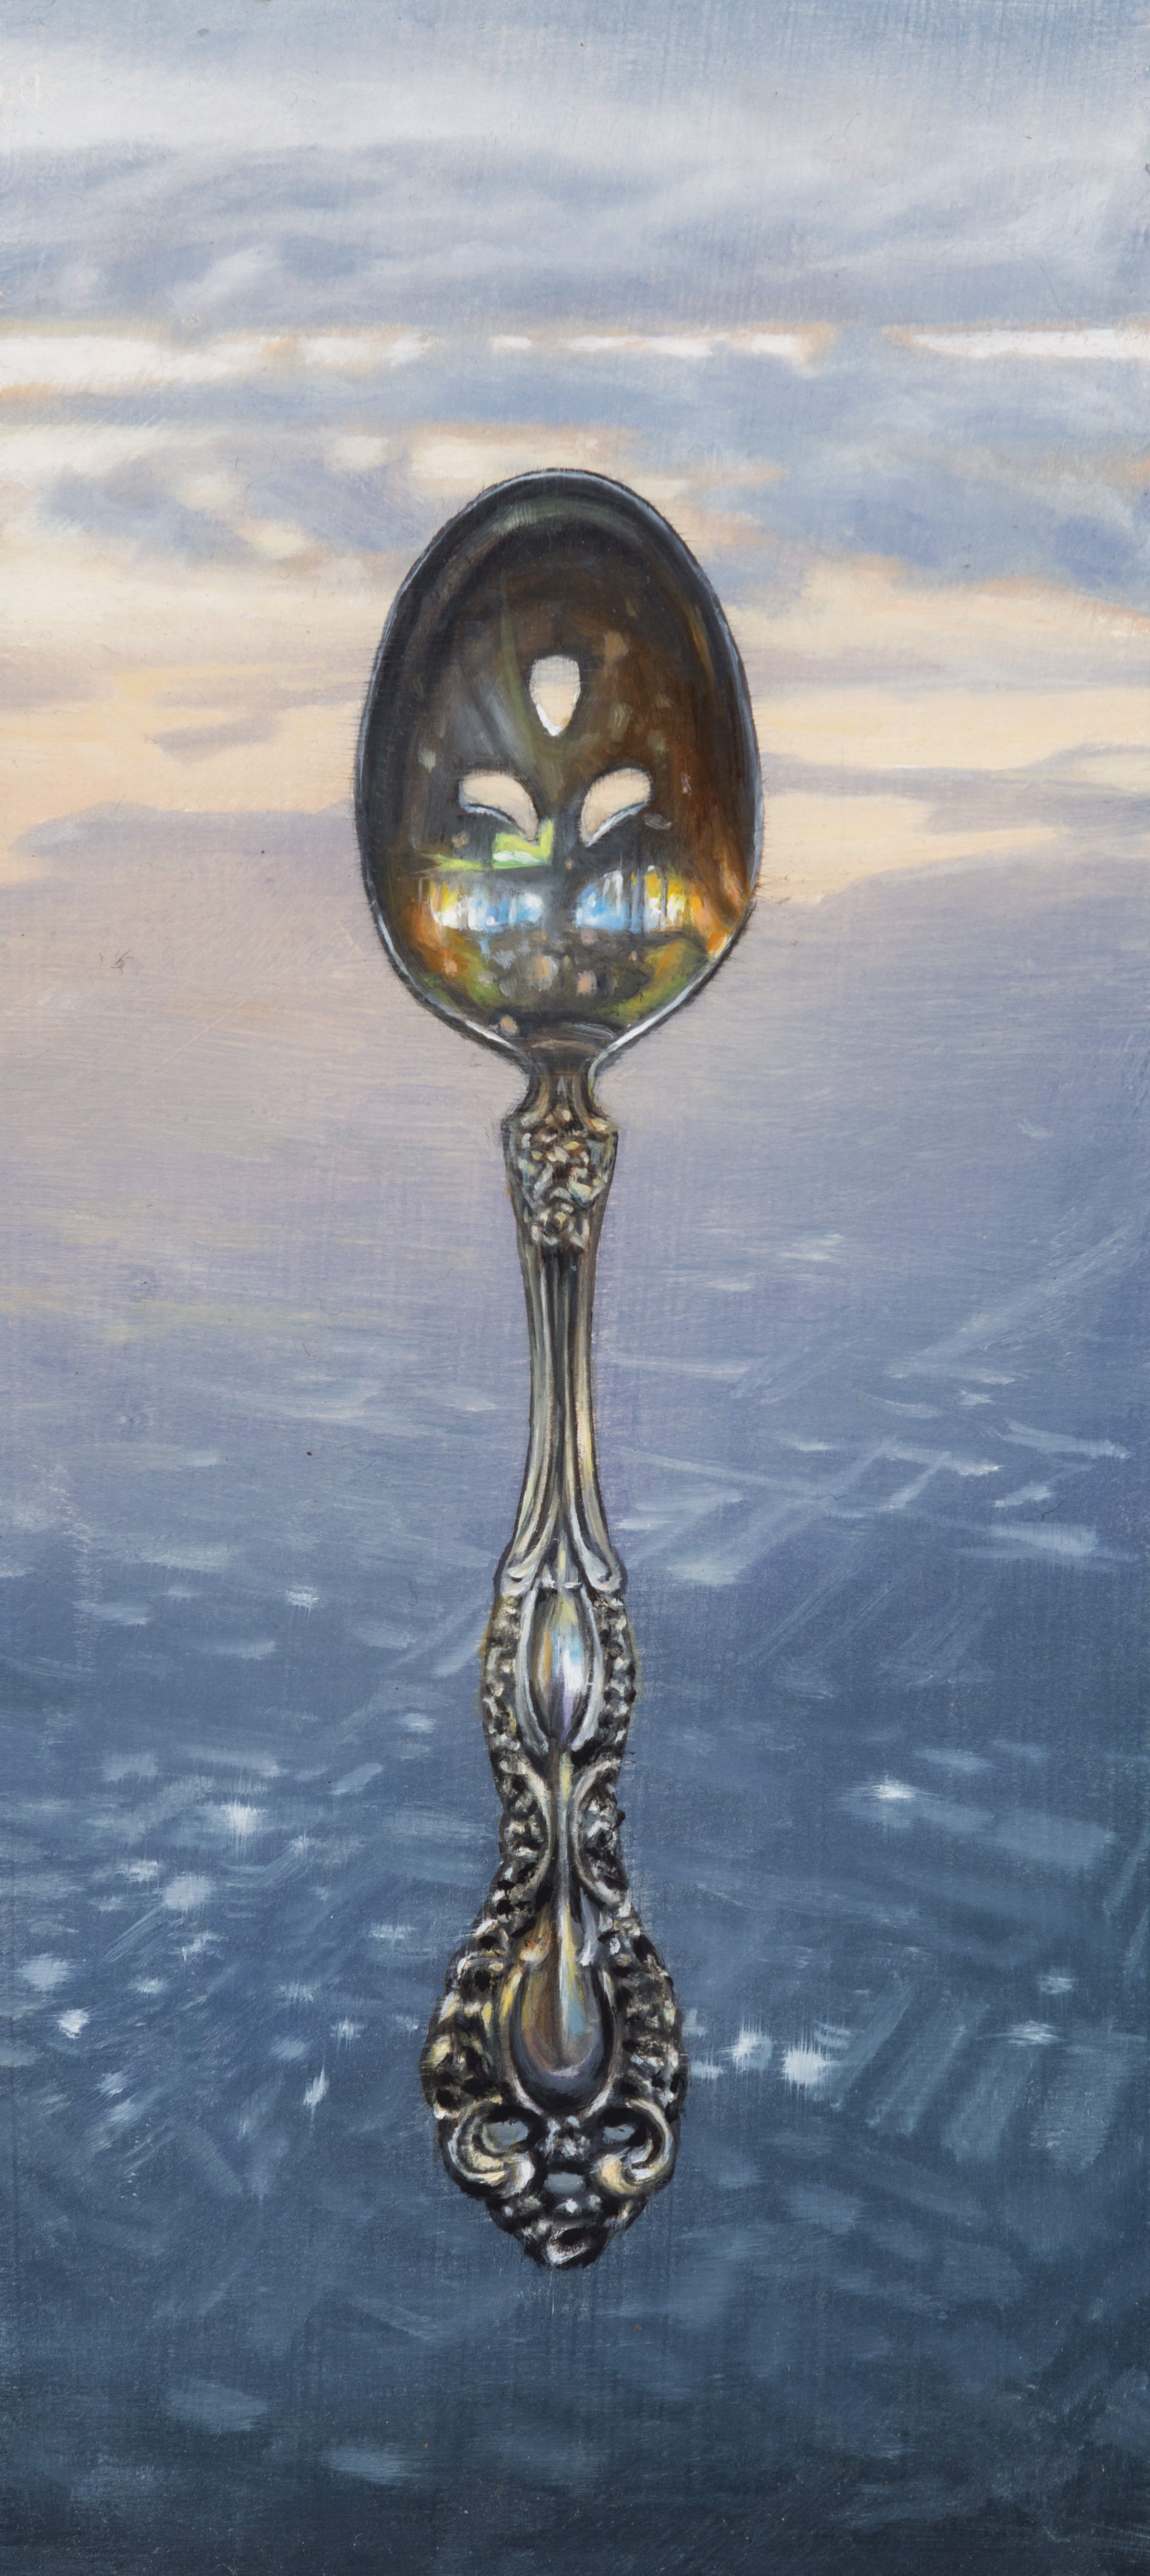 Spoon by Gregory Block